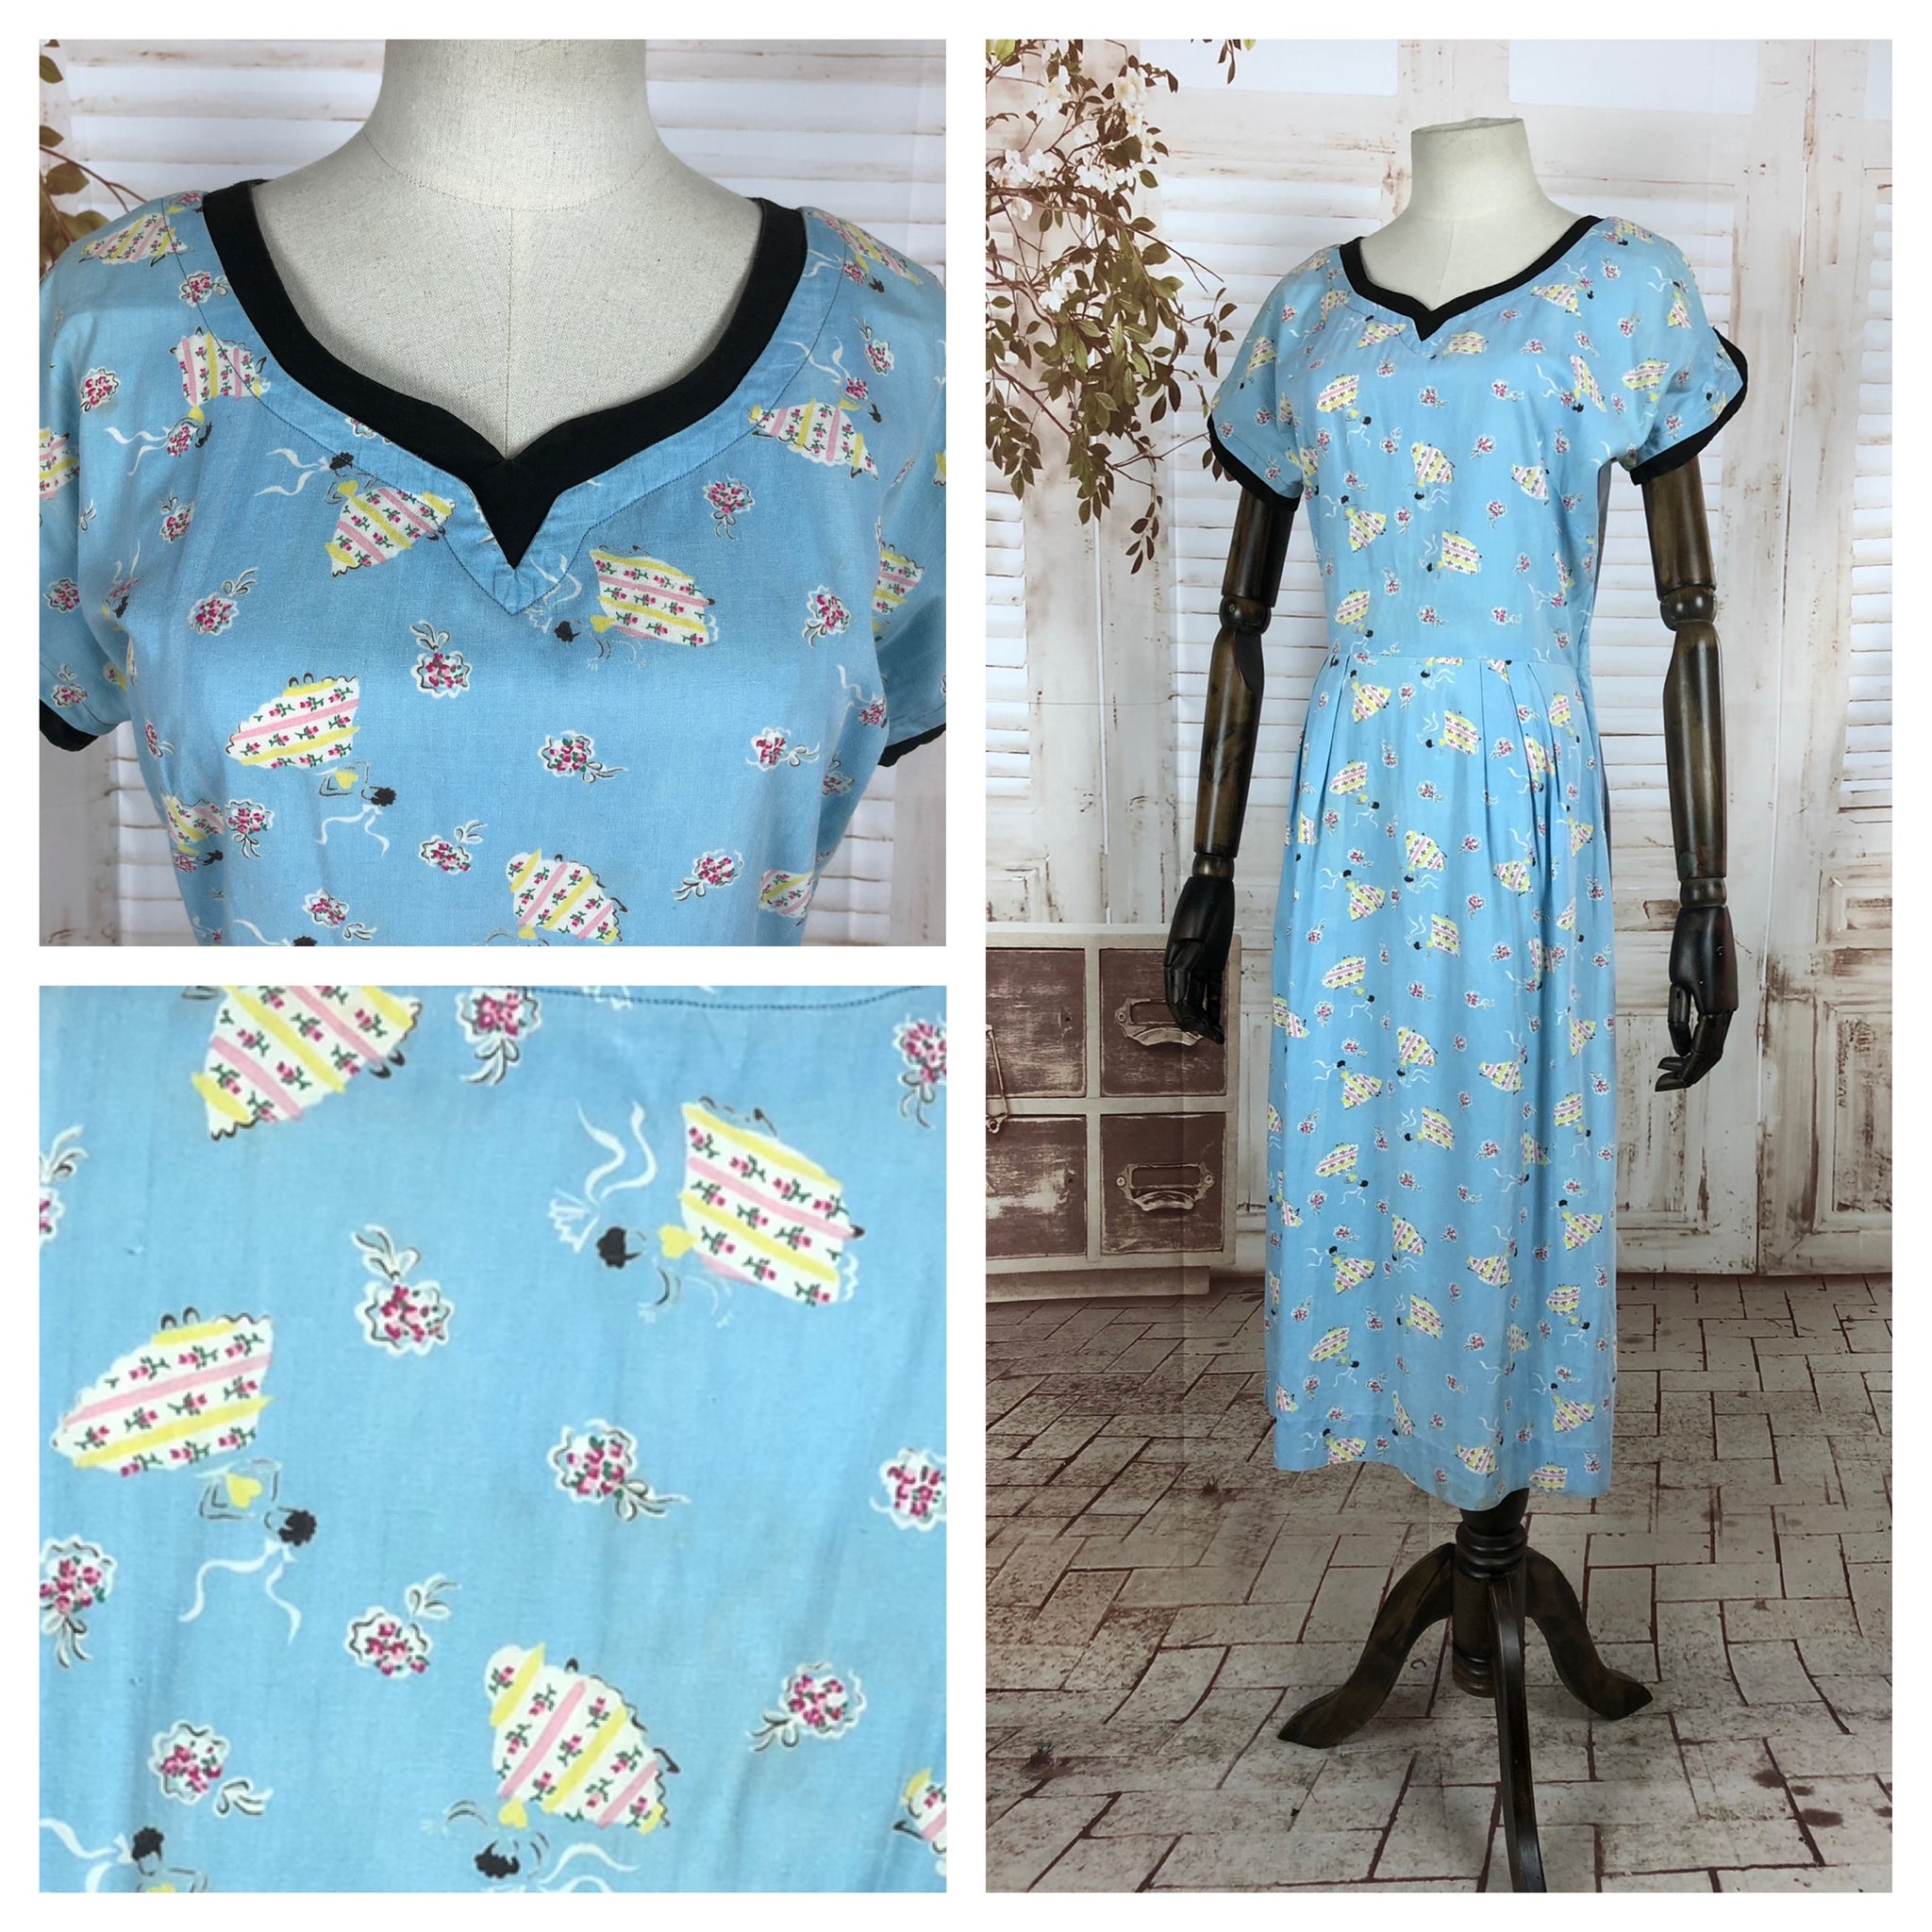 Original 1940s 40s Vintage Feed Sack Sky Blue Novelty Print Day Dress